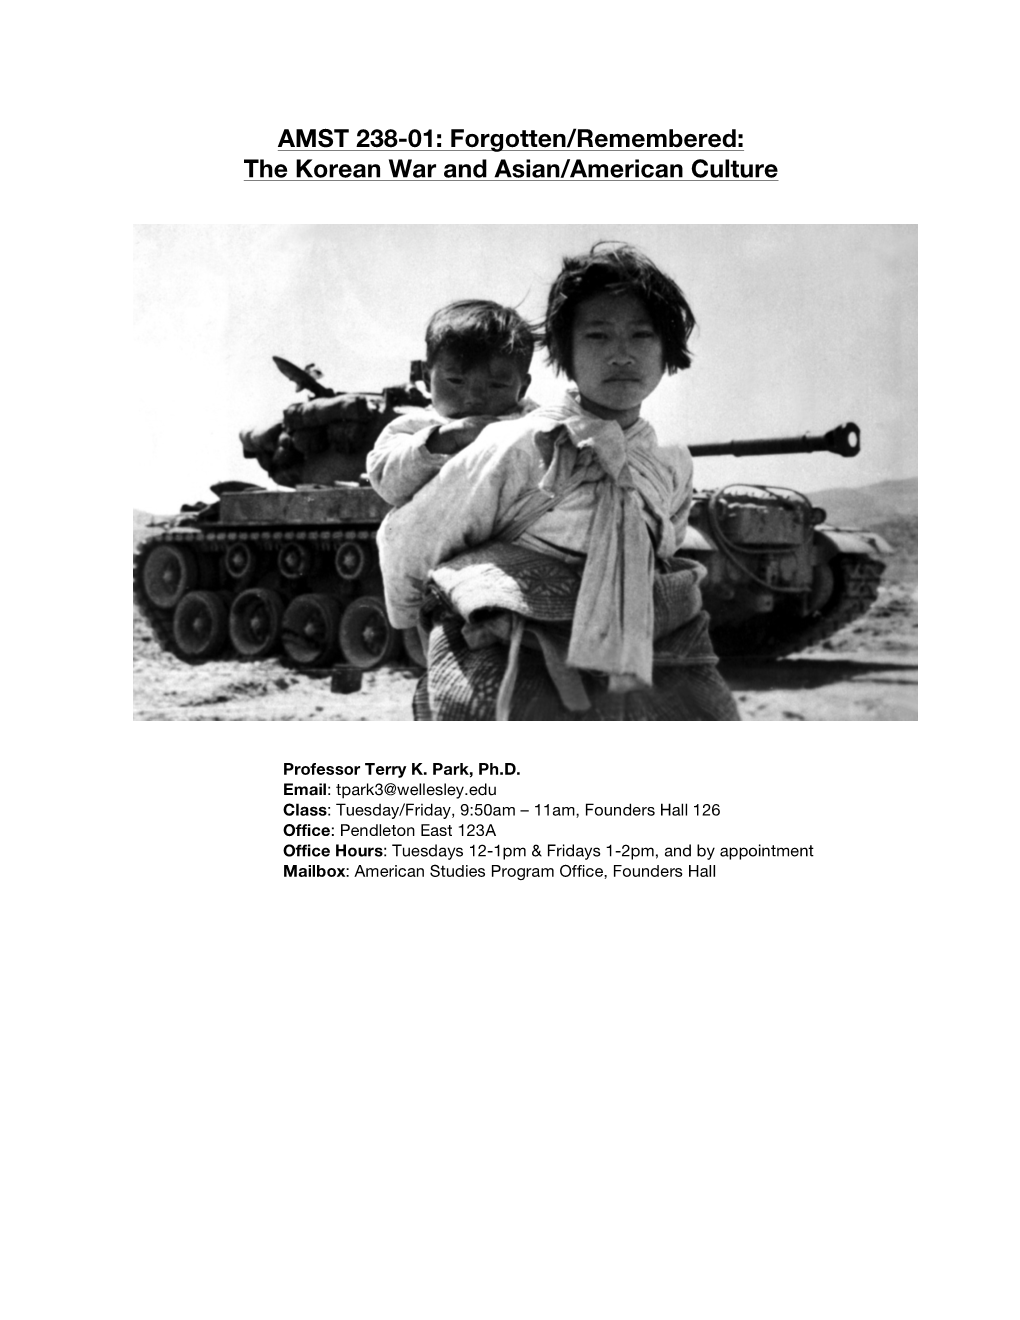 The Korean War and Asian/American Culture